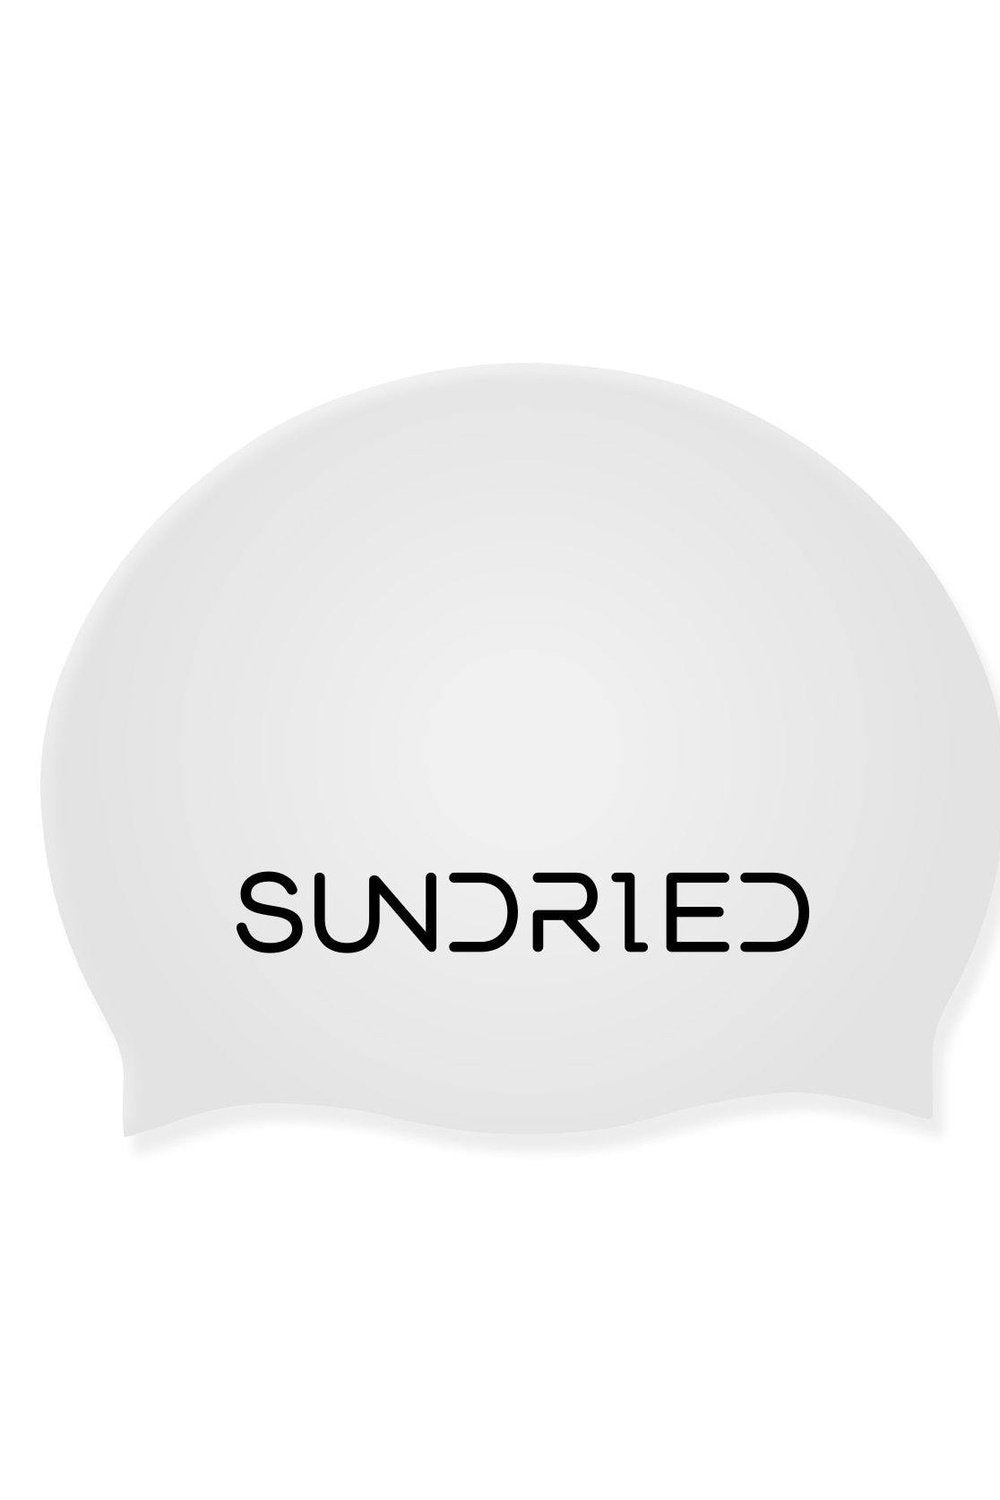 Sundried Swim Hat Accessories White SD0111 White Activewear